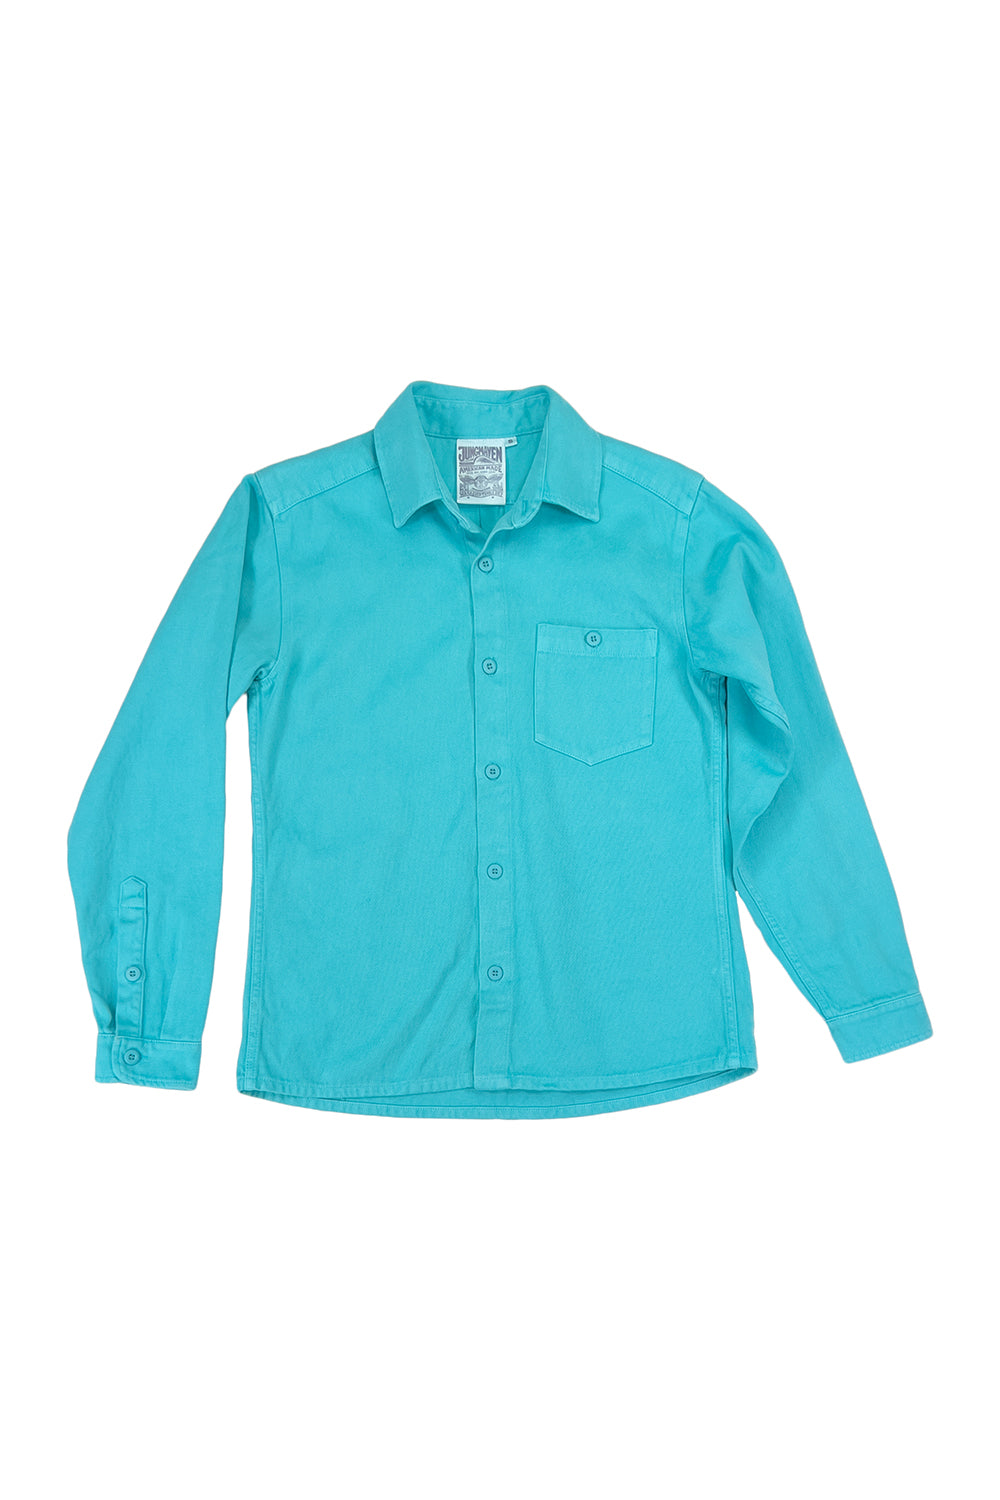 Topanga Shirt | Jungmaven Hemp Clothing & Accessories / Color: Caribbean Blue